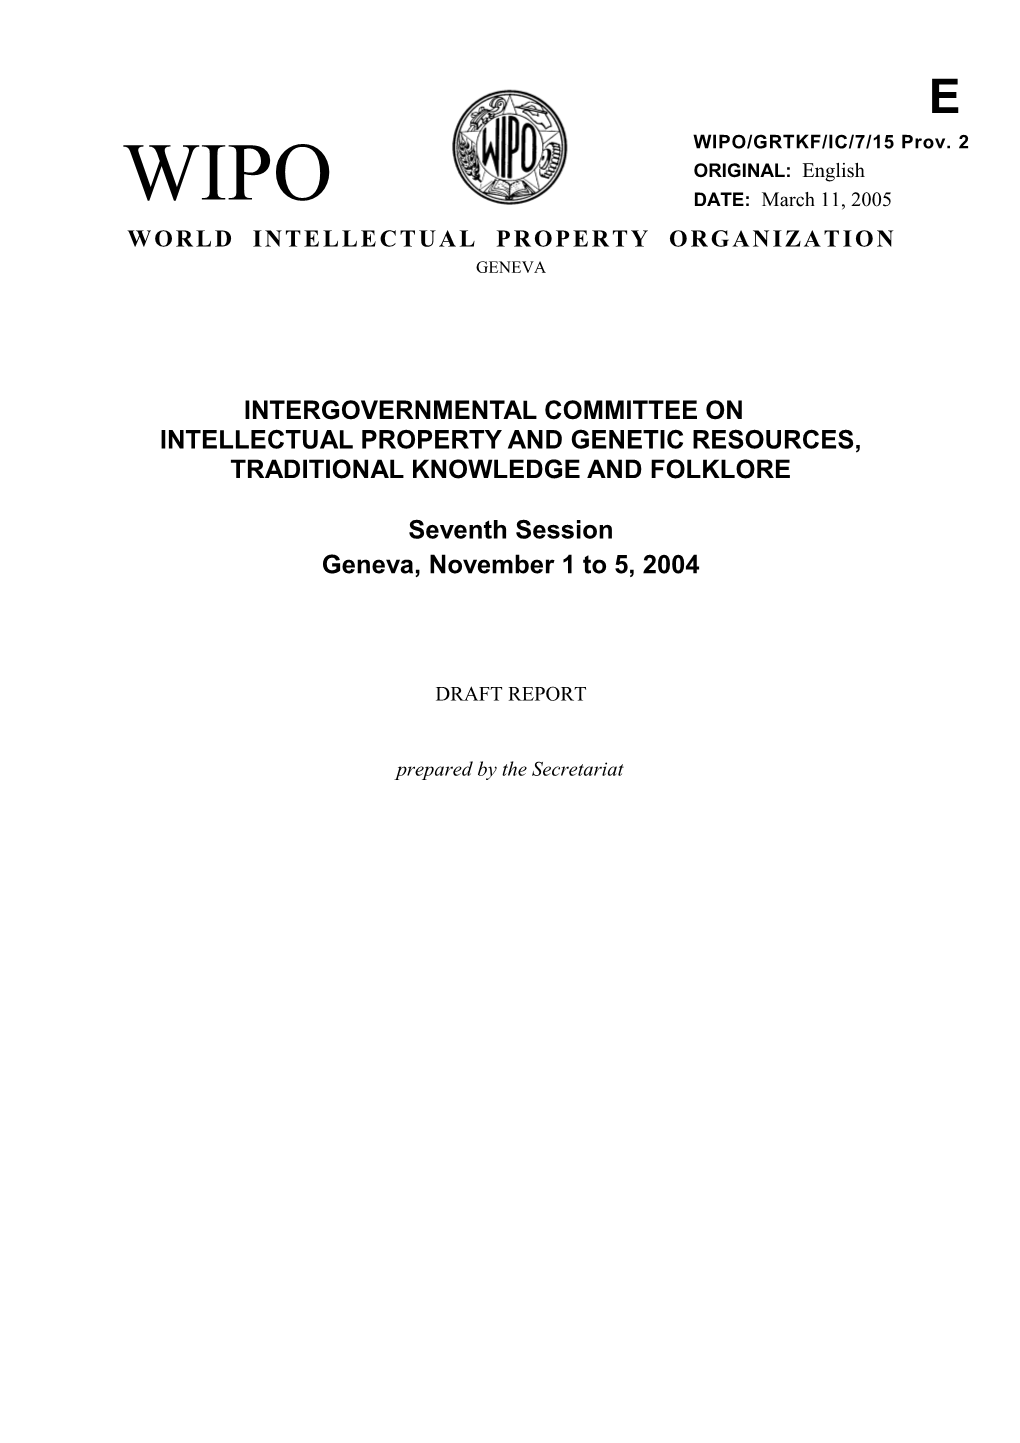 WIPO/GRTKF/IC/7/15 PROV.2: Draft Report